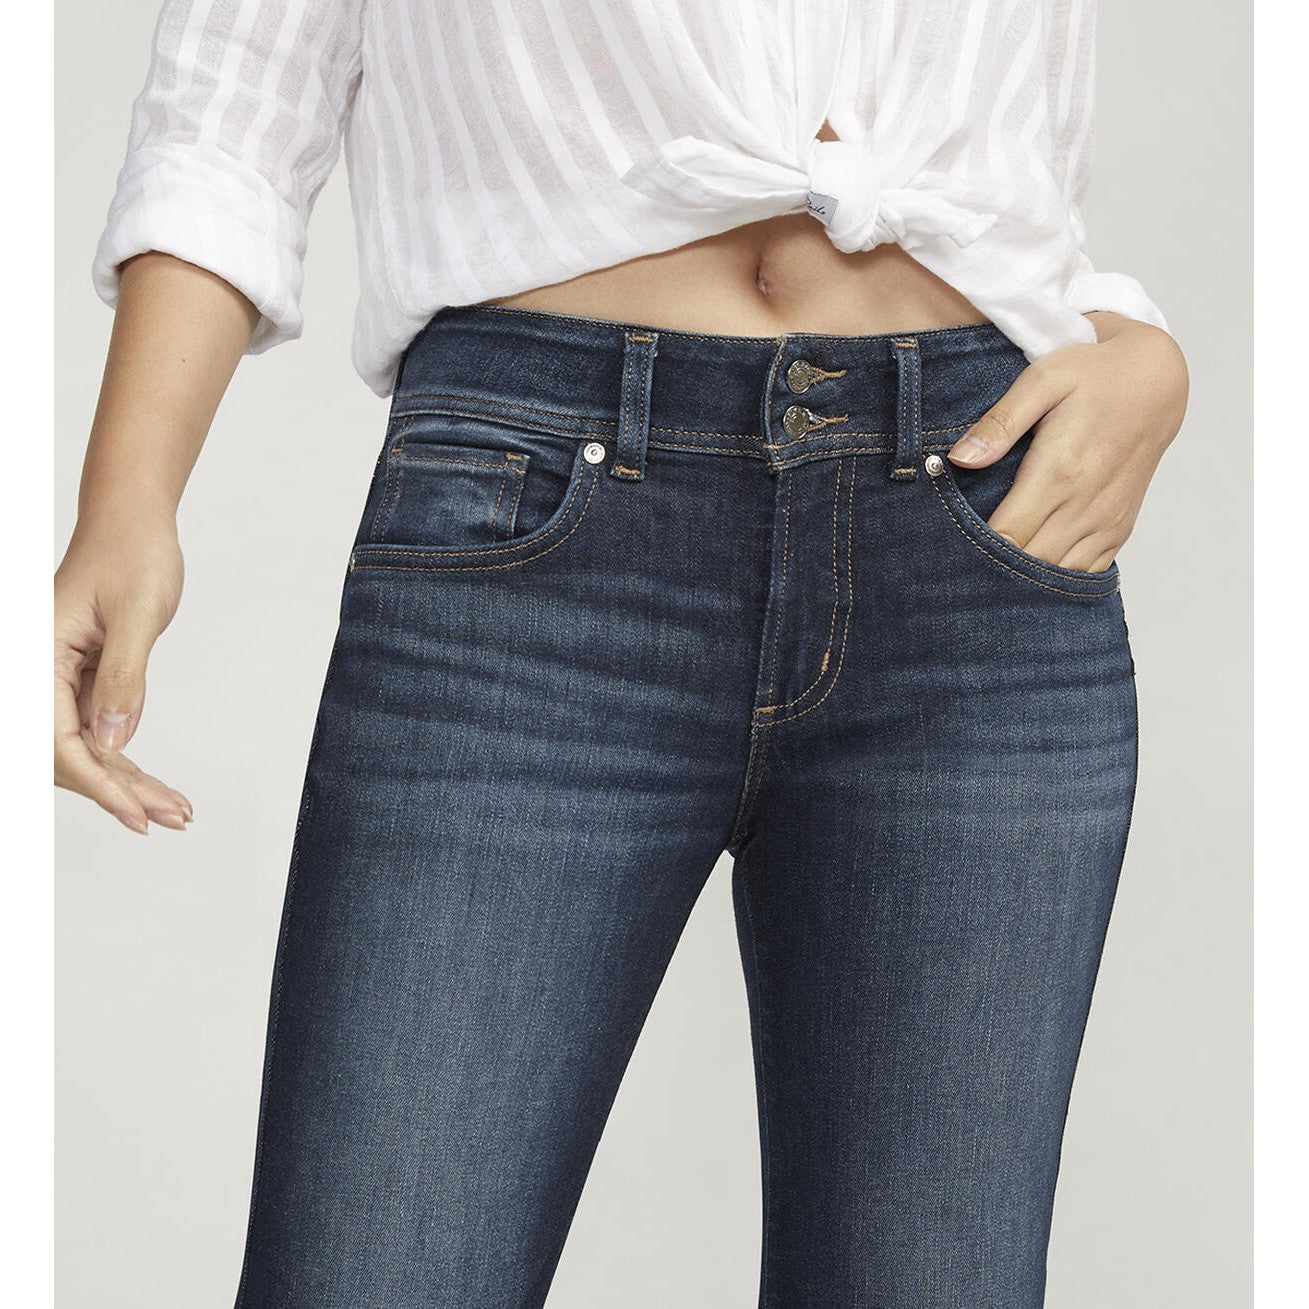 Silver Jeans Co. Women's Suki Mid Rise Capri Jeans, Med Wash Ecf252, 32W x  23L : : Clothing, Shoes & Accessories